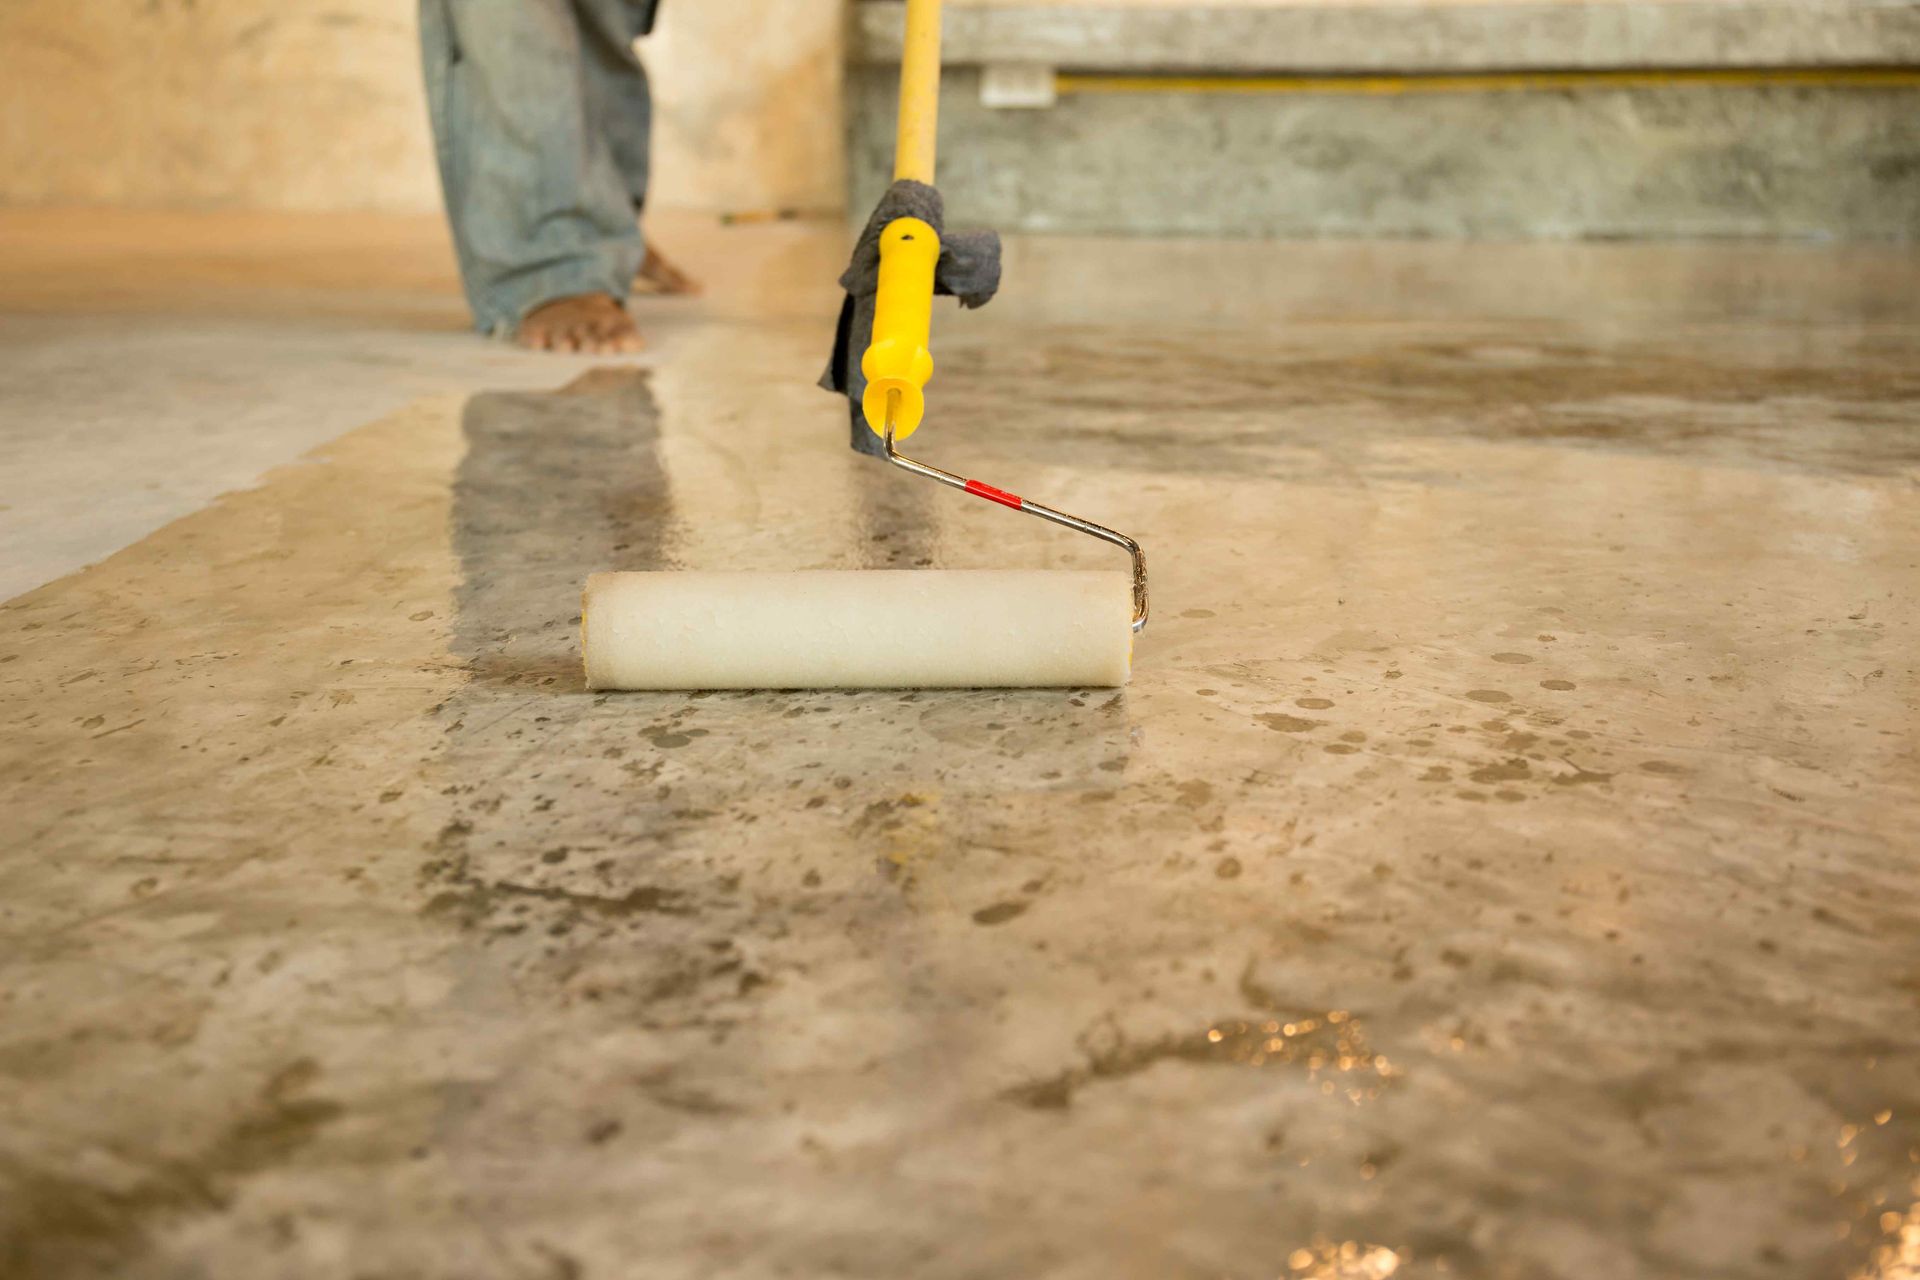 Concrete Floor Coating